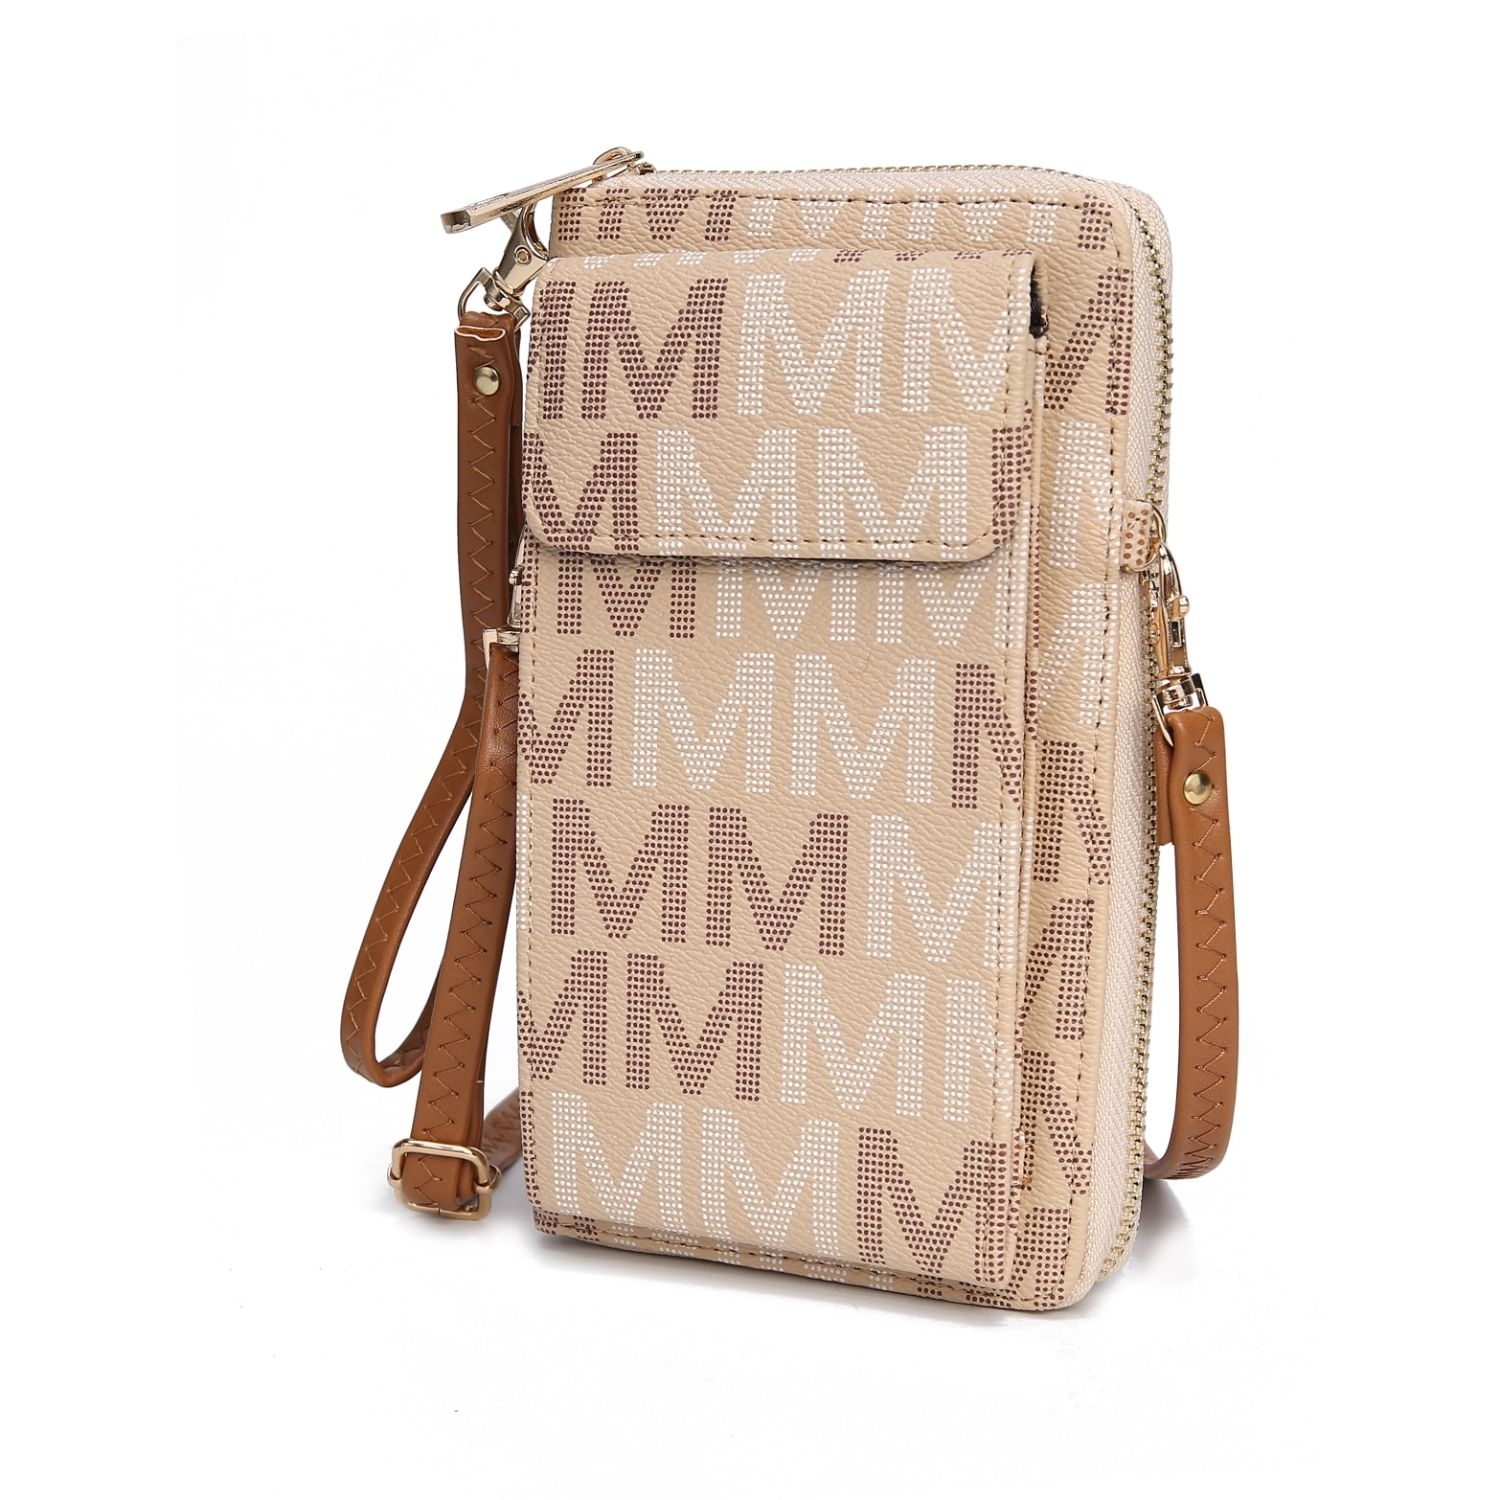 MKF Collection Cossetta Cell Phone Crossbody Handbag Wallet By Mia K. - Red